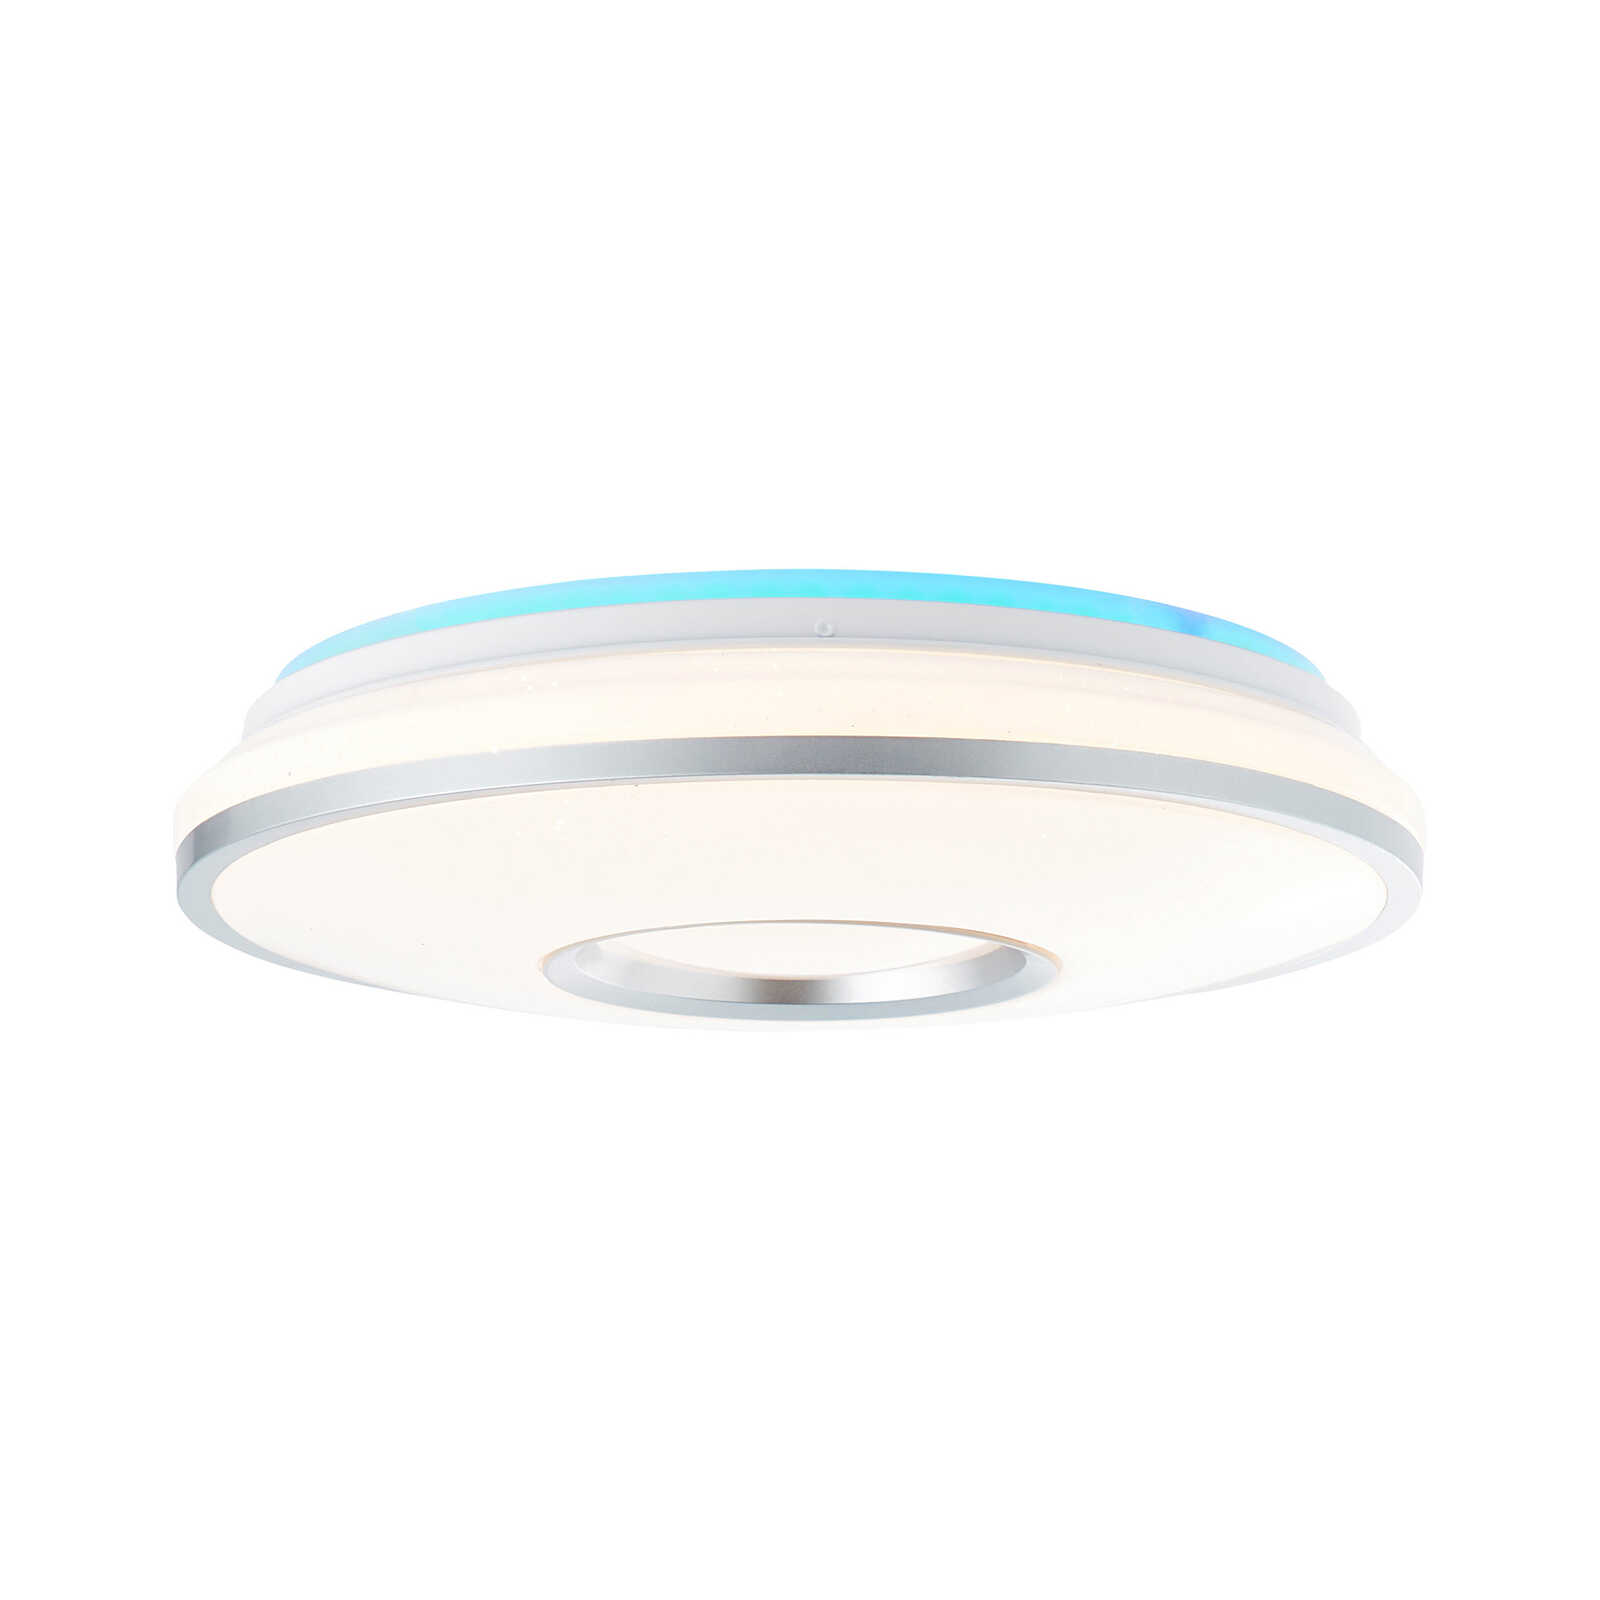 Plastic ceiling light - Tessa 1 - Metallic
